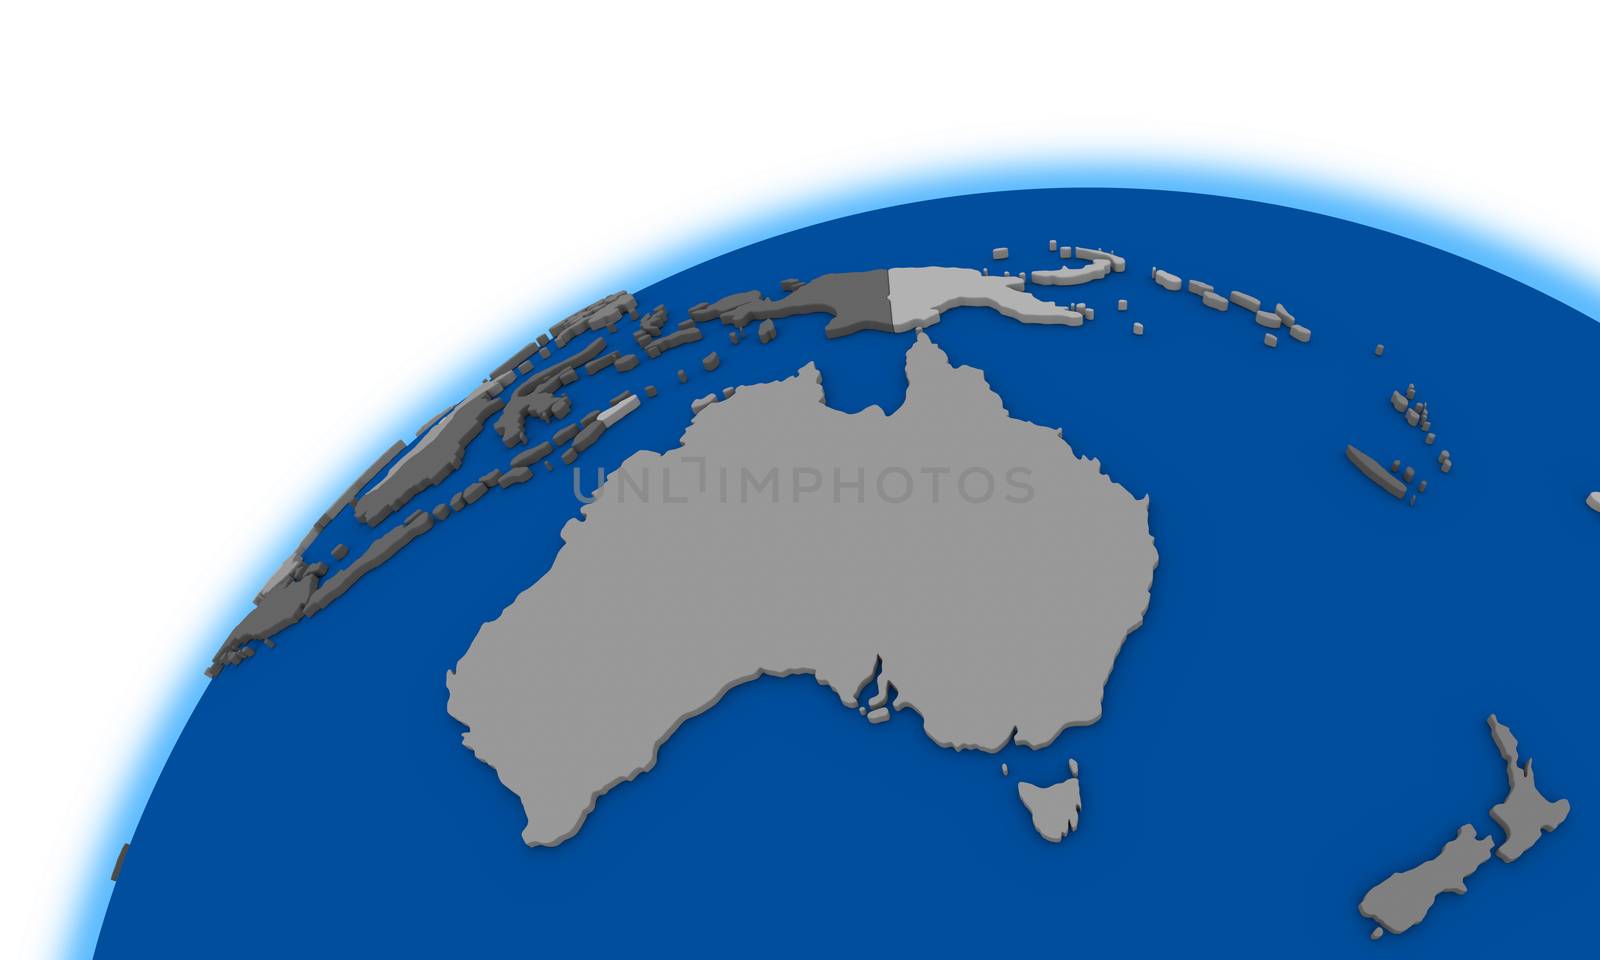 Australia on globe political map by Harvepino